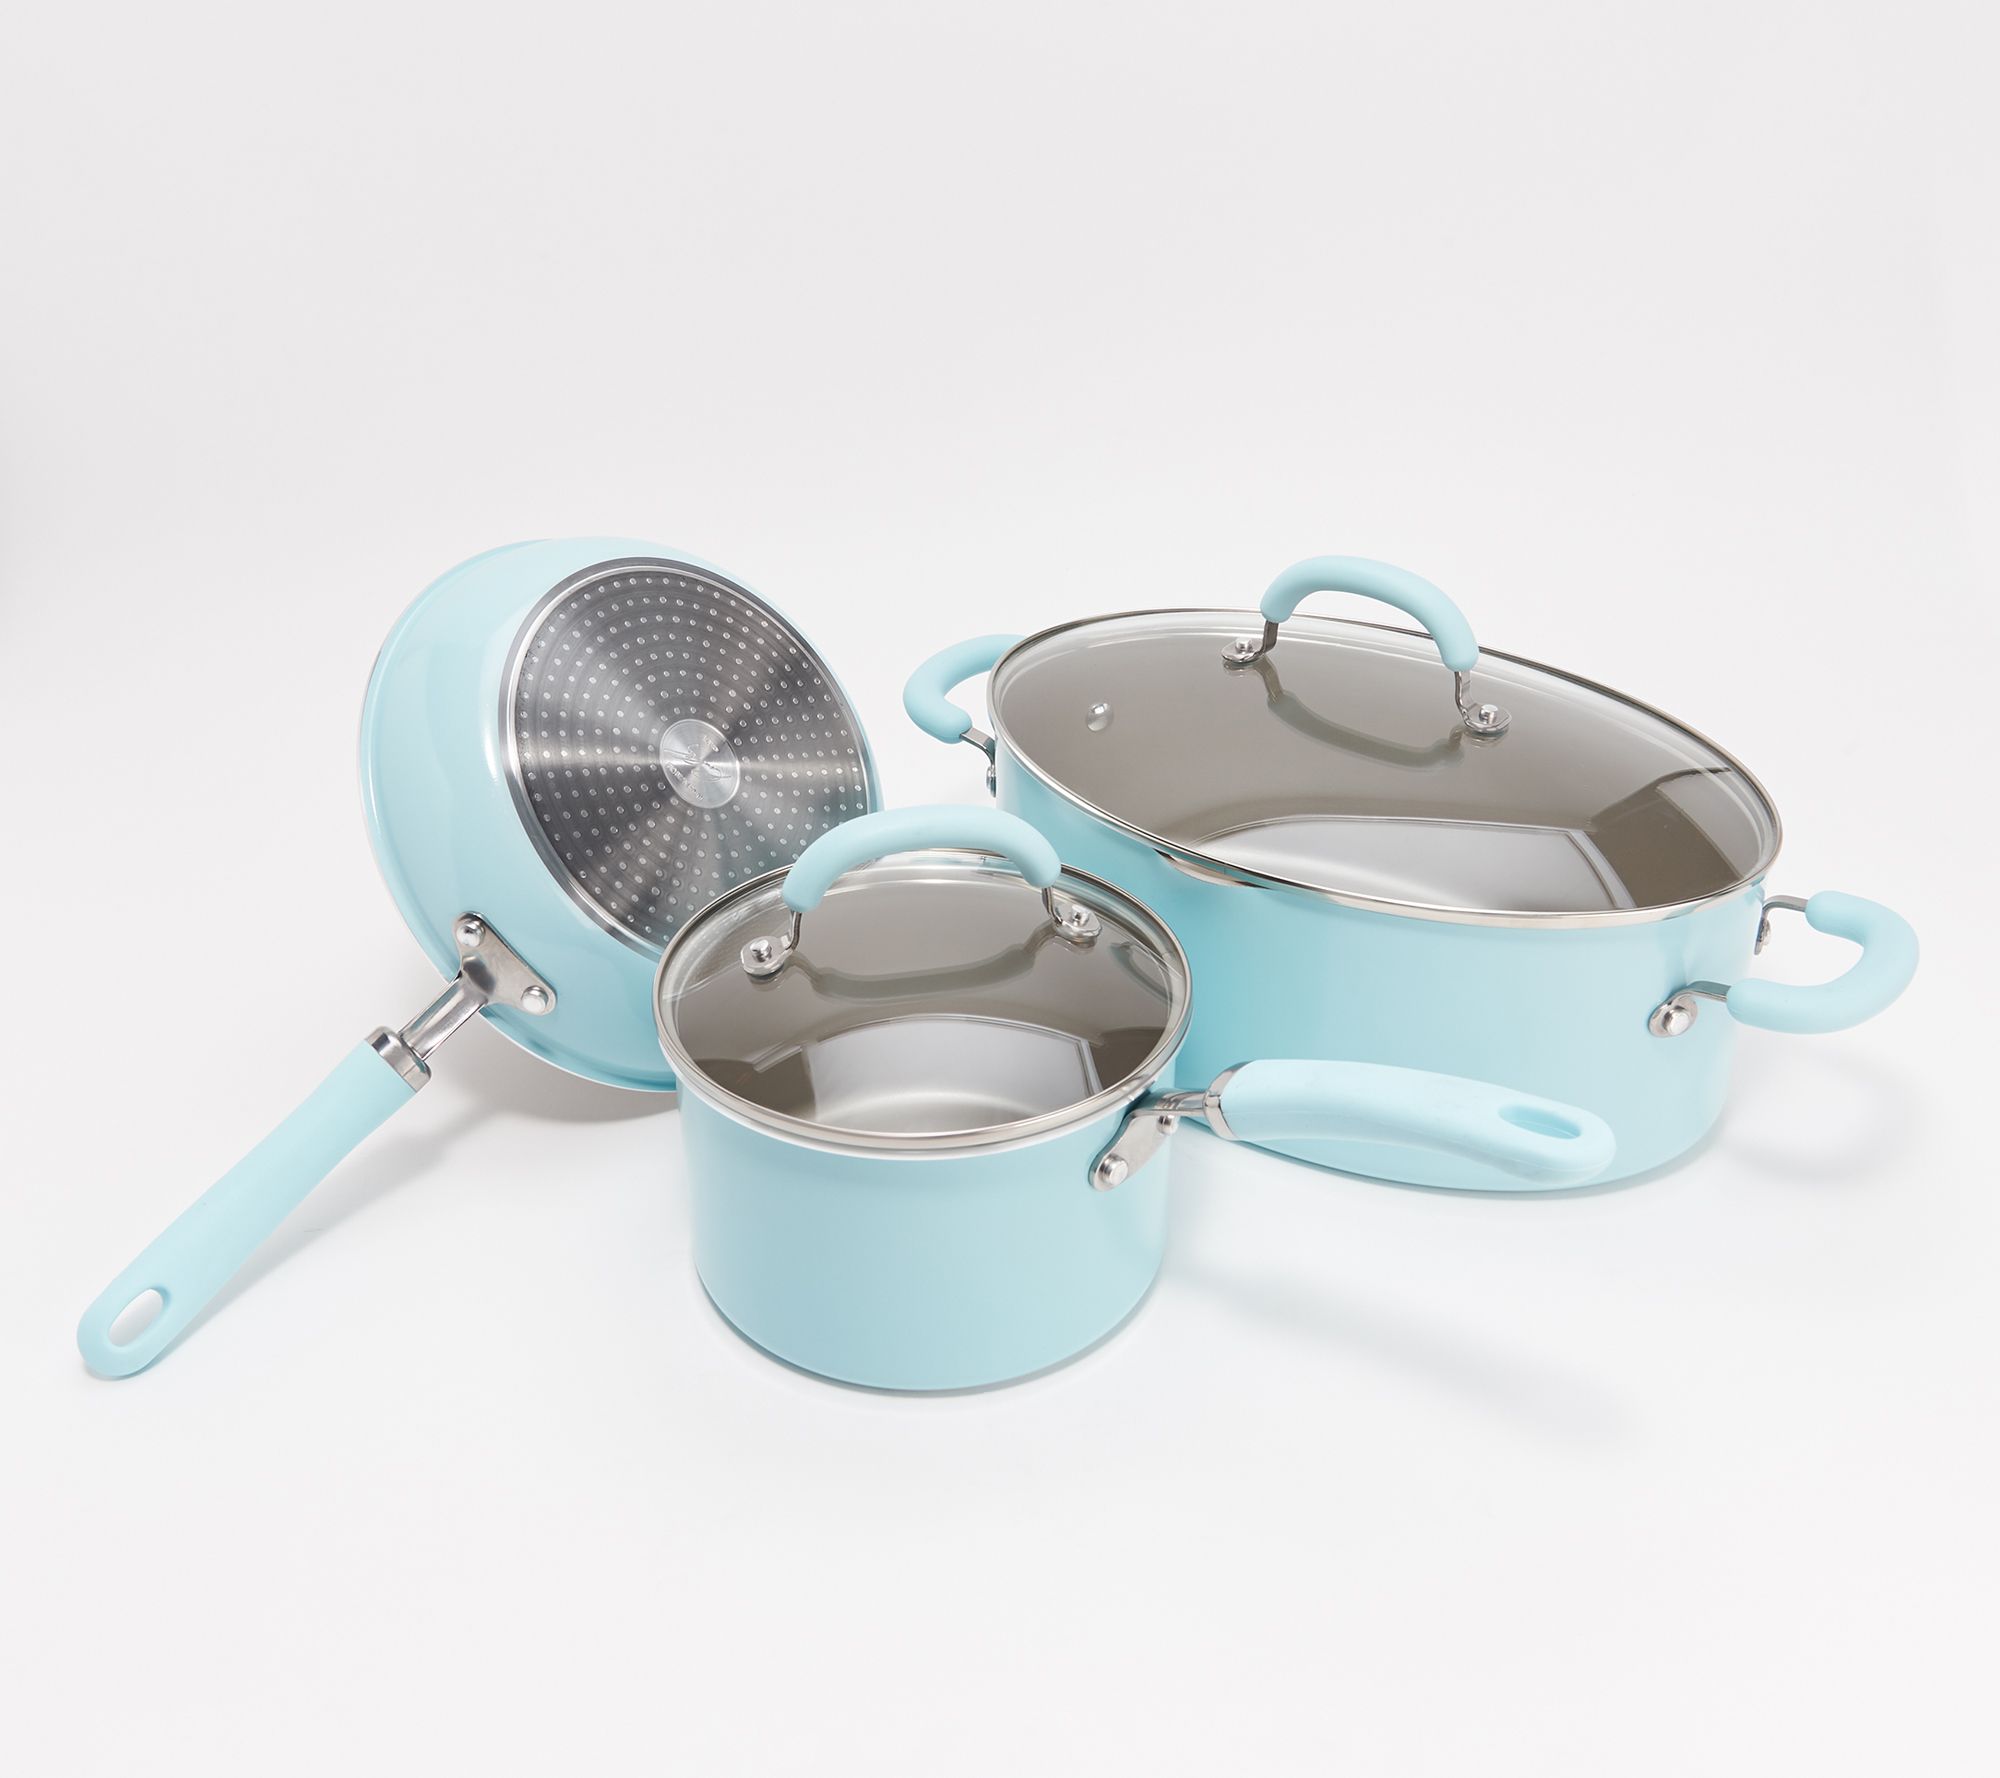 Rachael Ray Create Delicious Aluminum 11-pc Cookware Set 